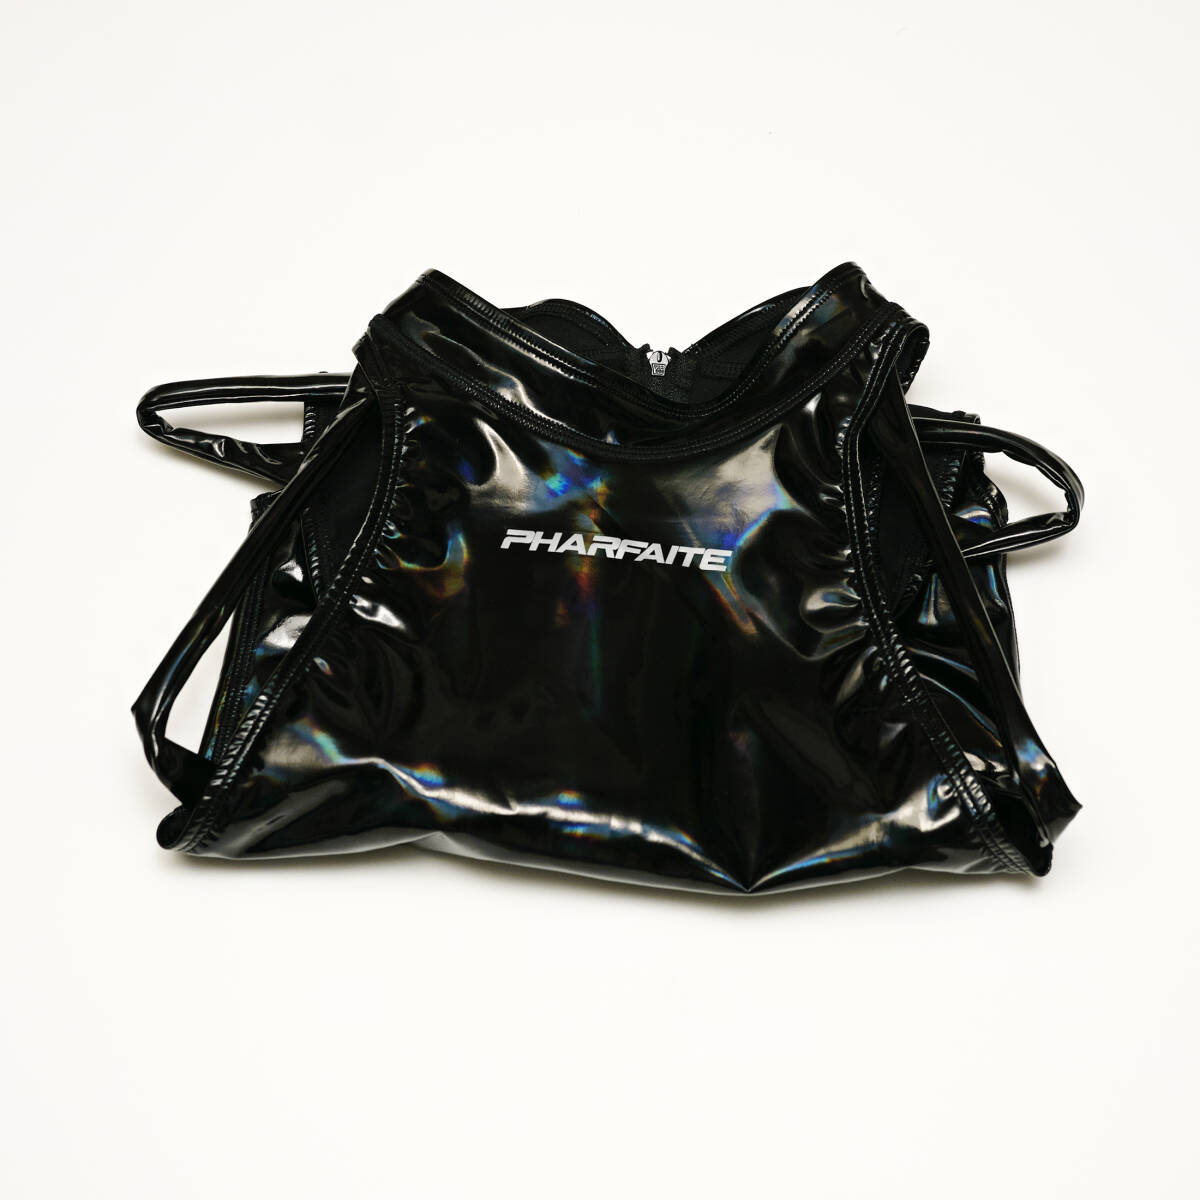  parfait toPharfaite enamel high‐necked binder -Fullback Aurora XXL size 